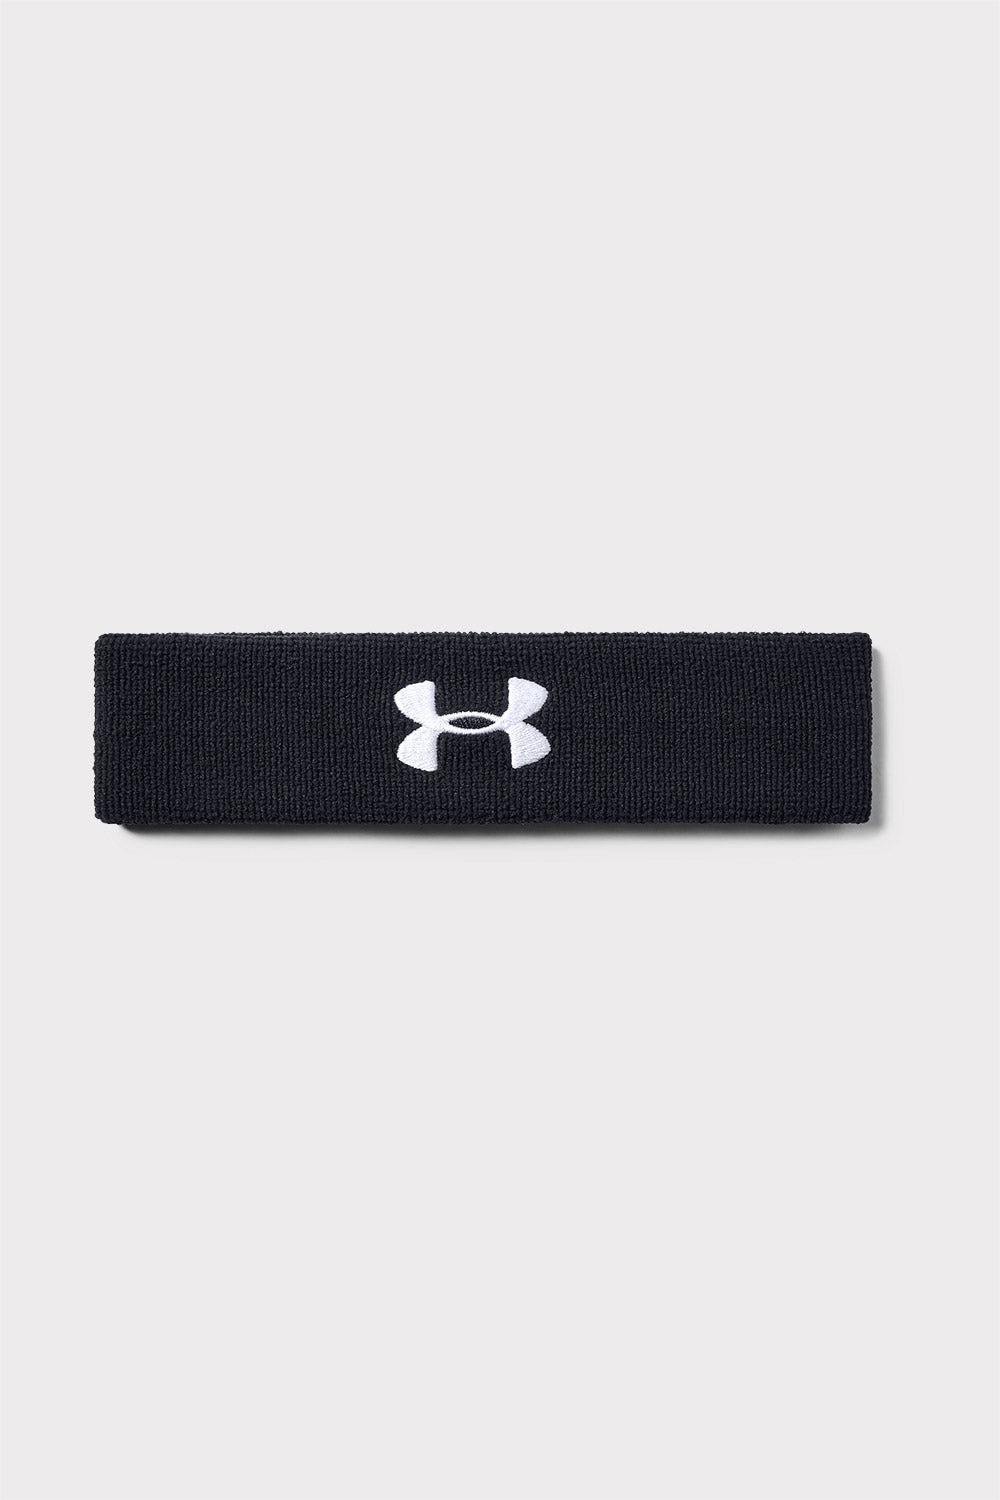 UA Performance Headband - černá/bílá